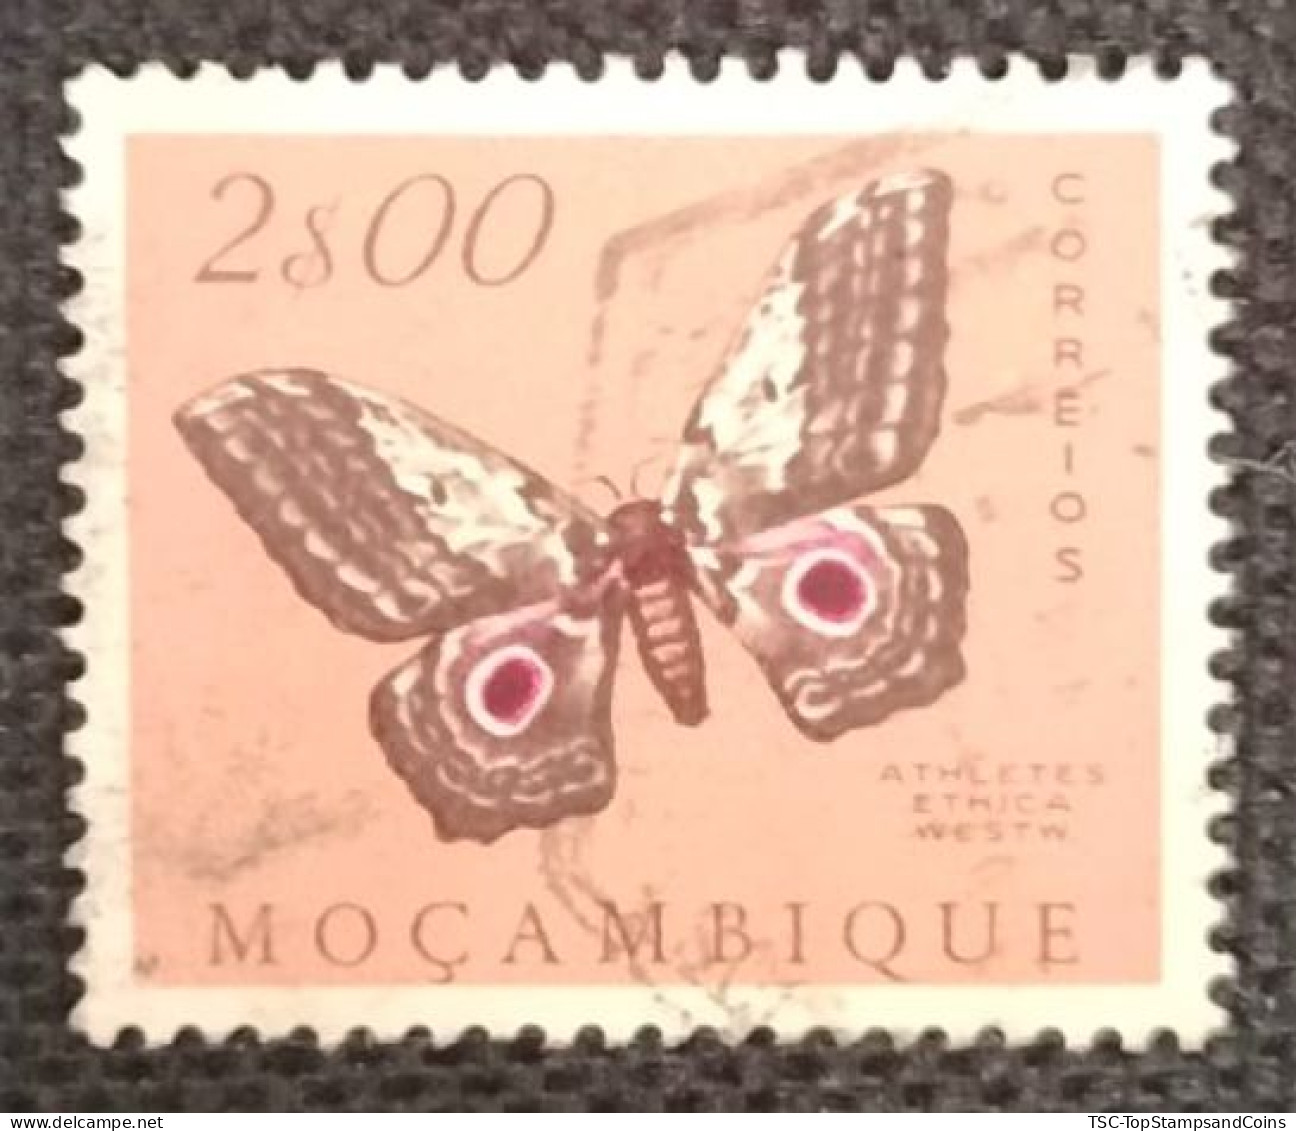 MOZPO0397UF - Mozambique Butterflies  - 2$00 Used Stamp - Mozambique - 1953 - Mozambique